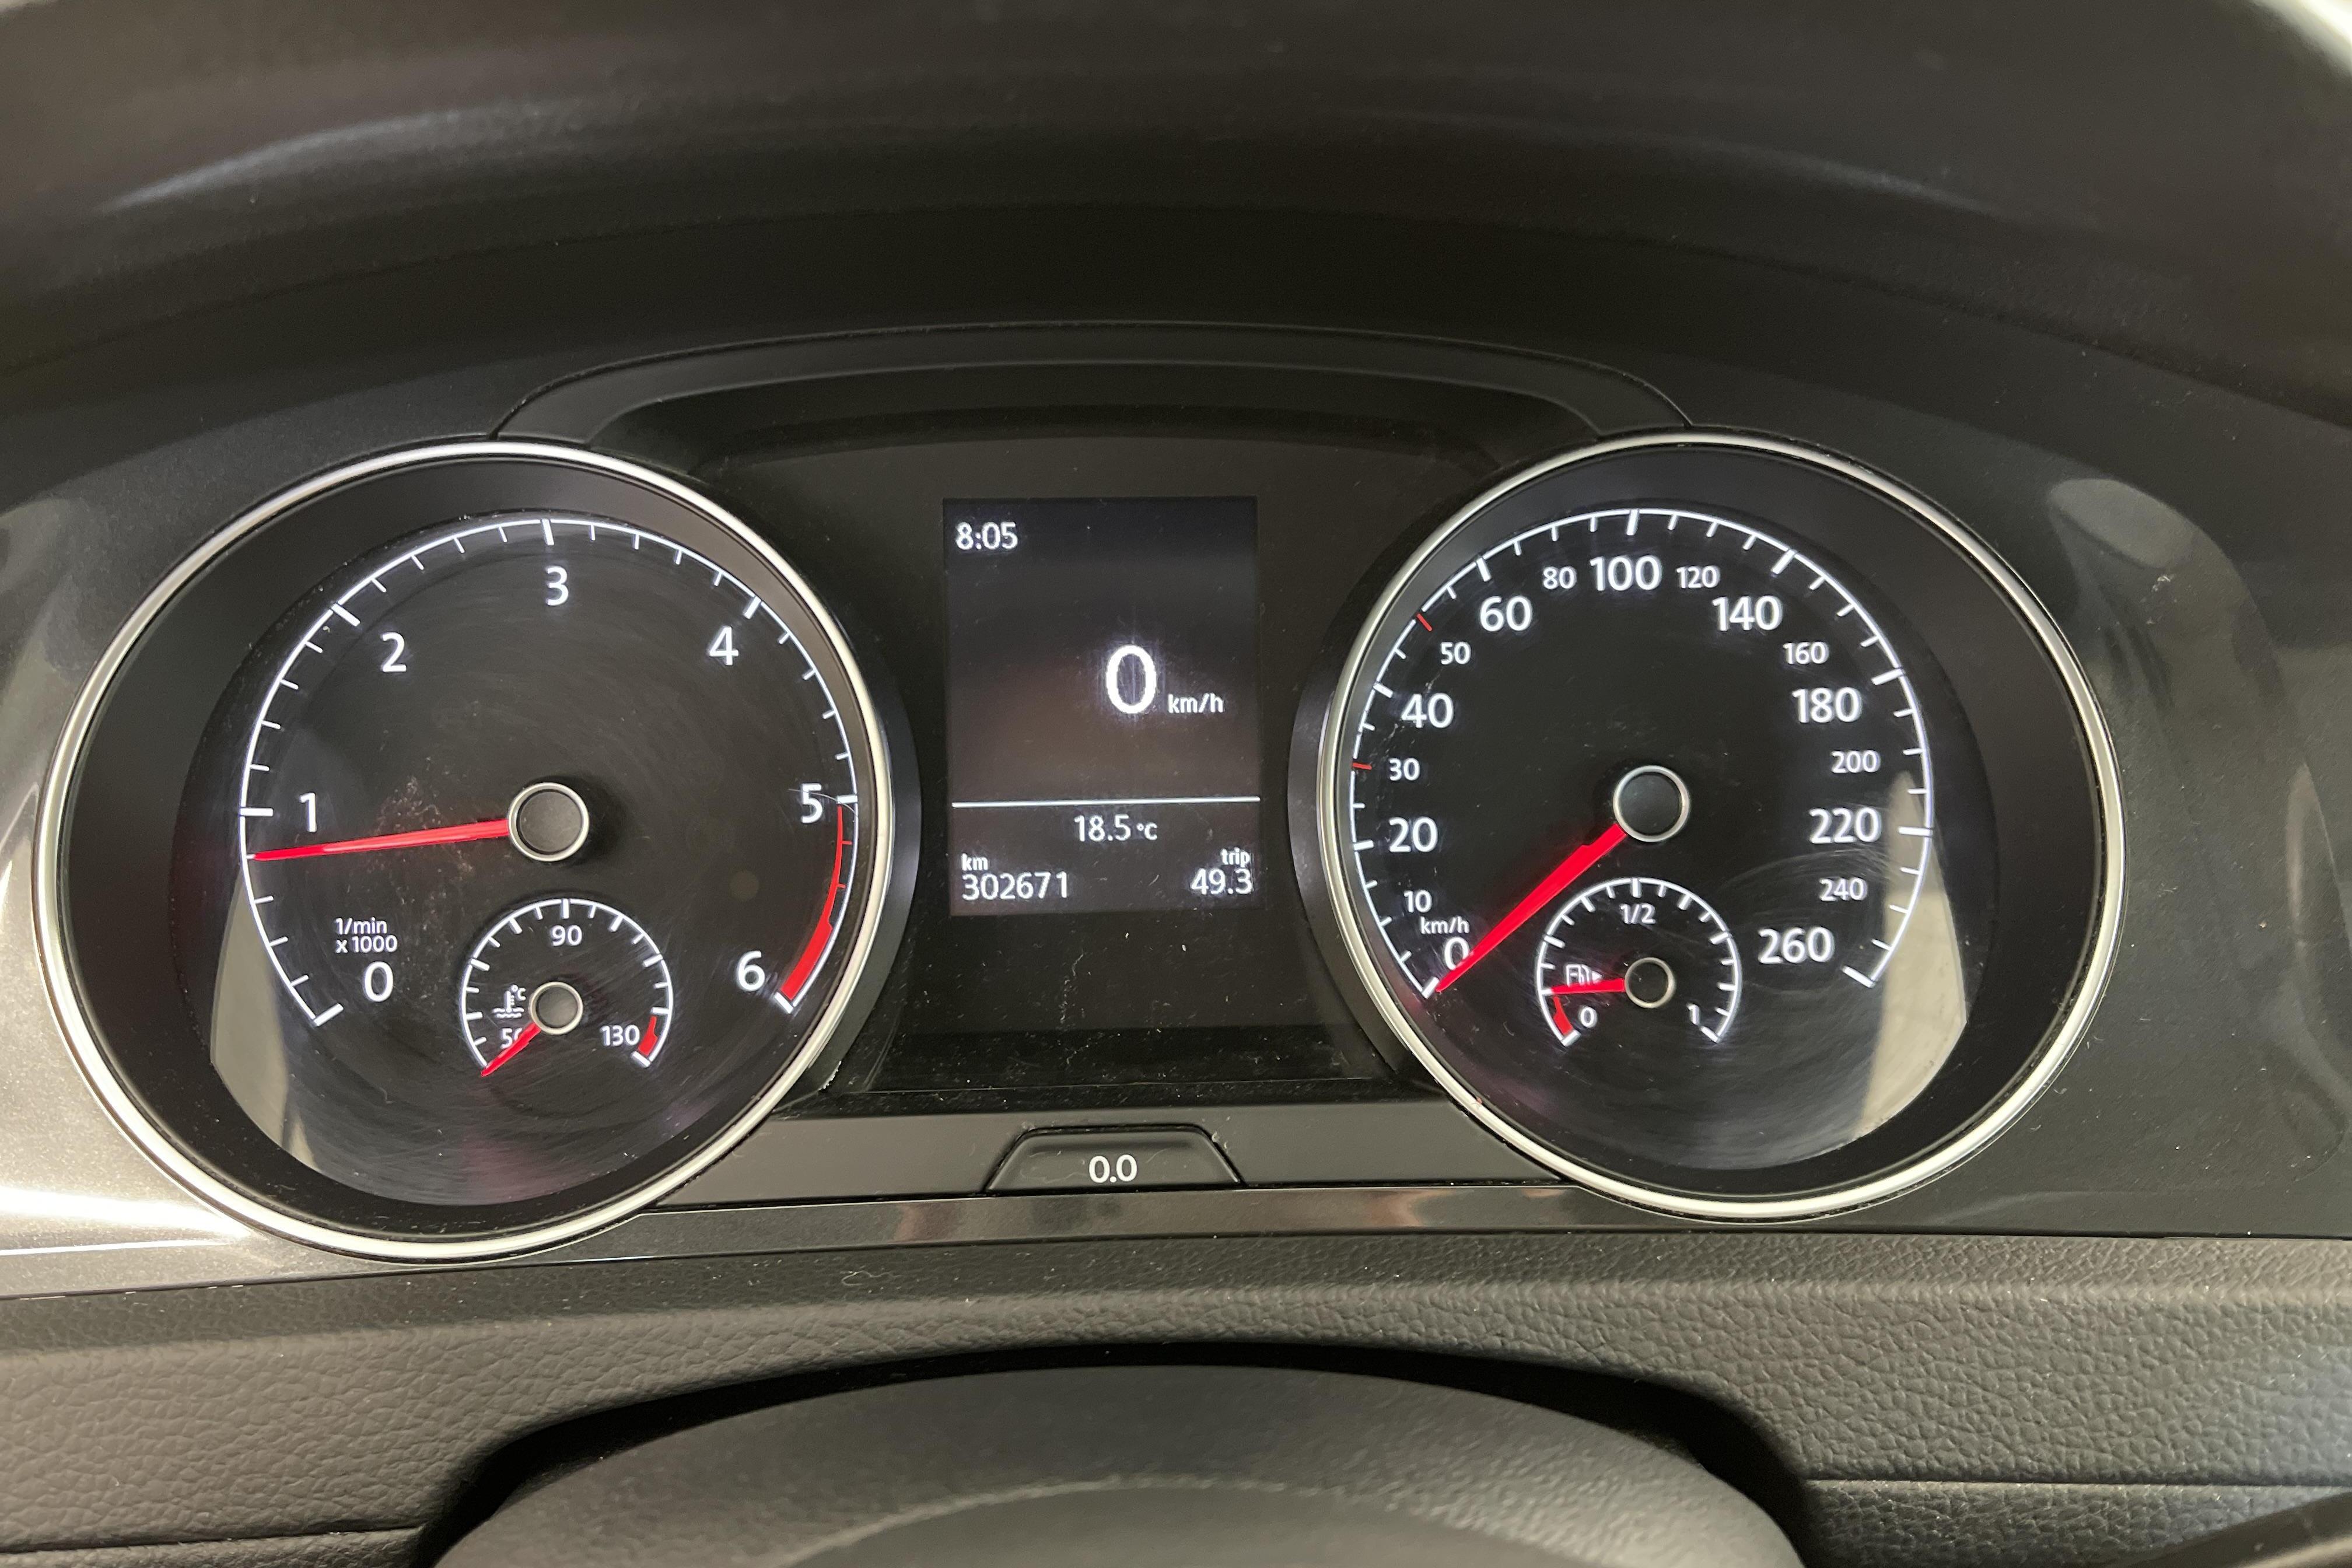 VW Golf VII 2.0 TDI 5dr 4MOTION (150hk) - 302 680 km - Manual - white - 2018